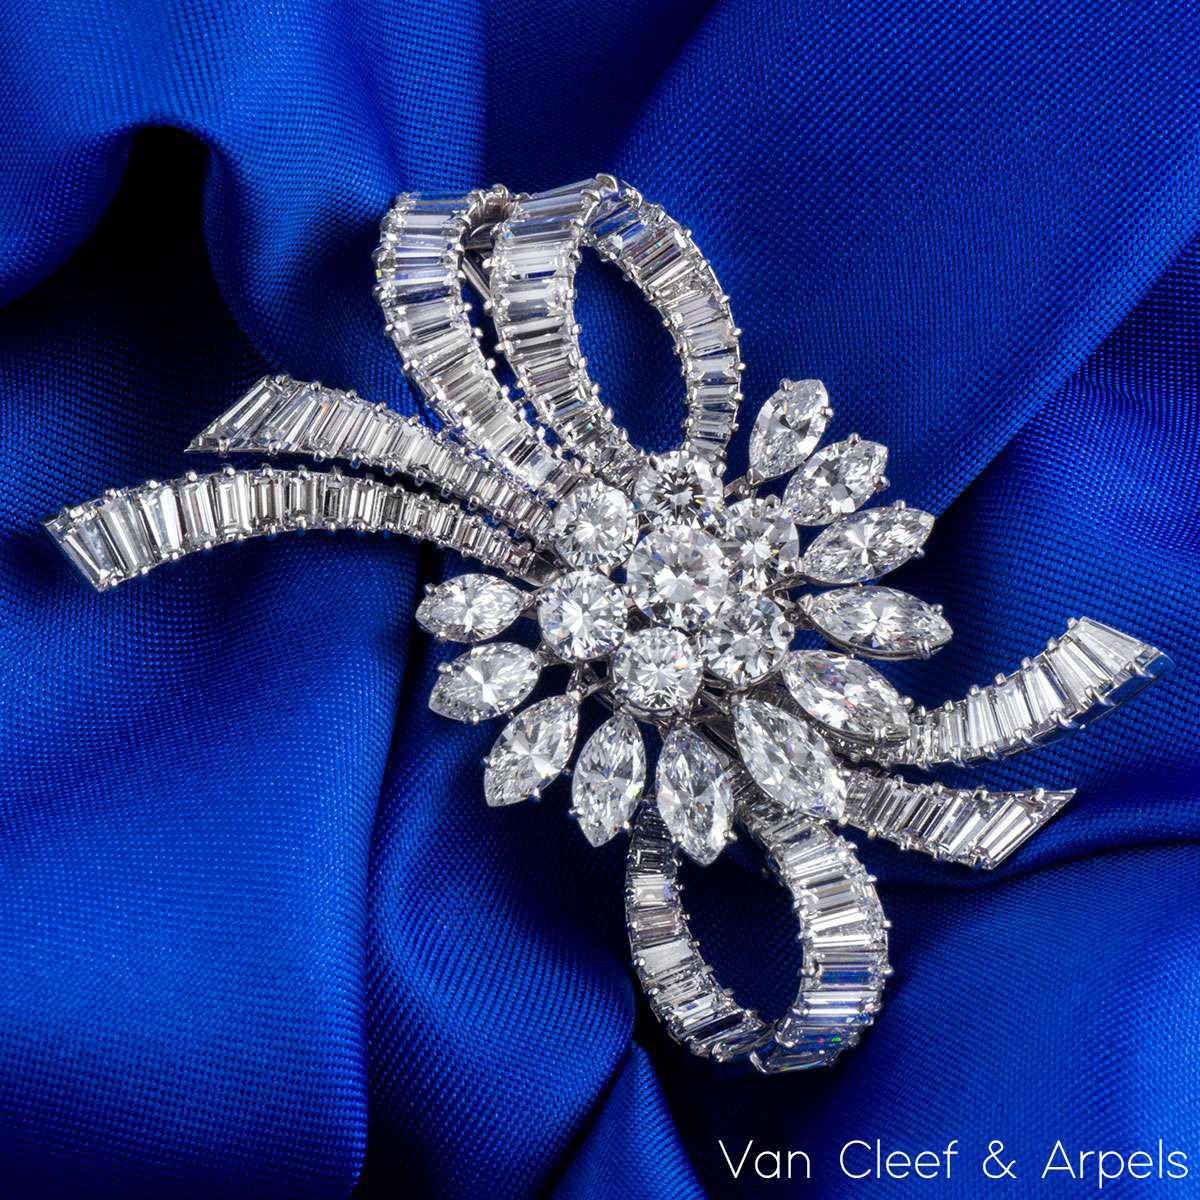 Van Cleef & Arpels Diamonds Brooch c.1950.